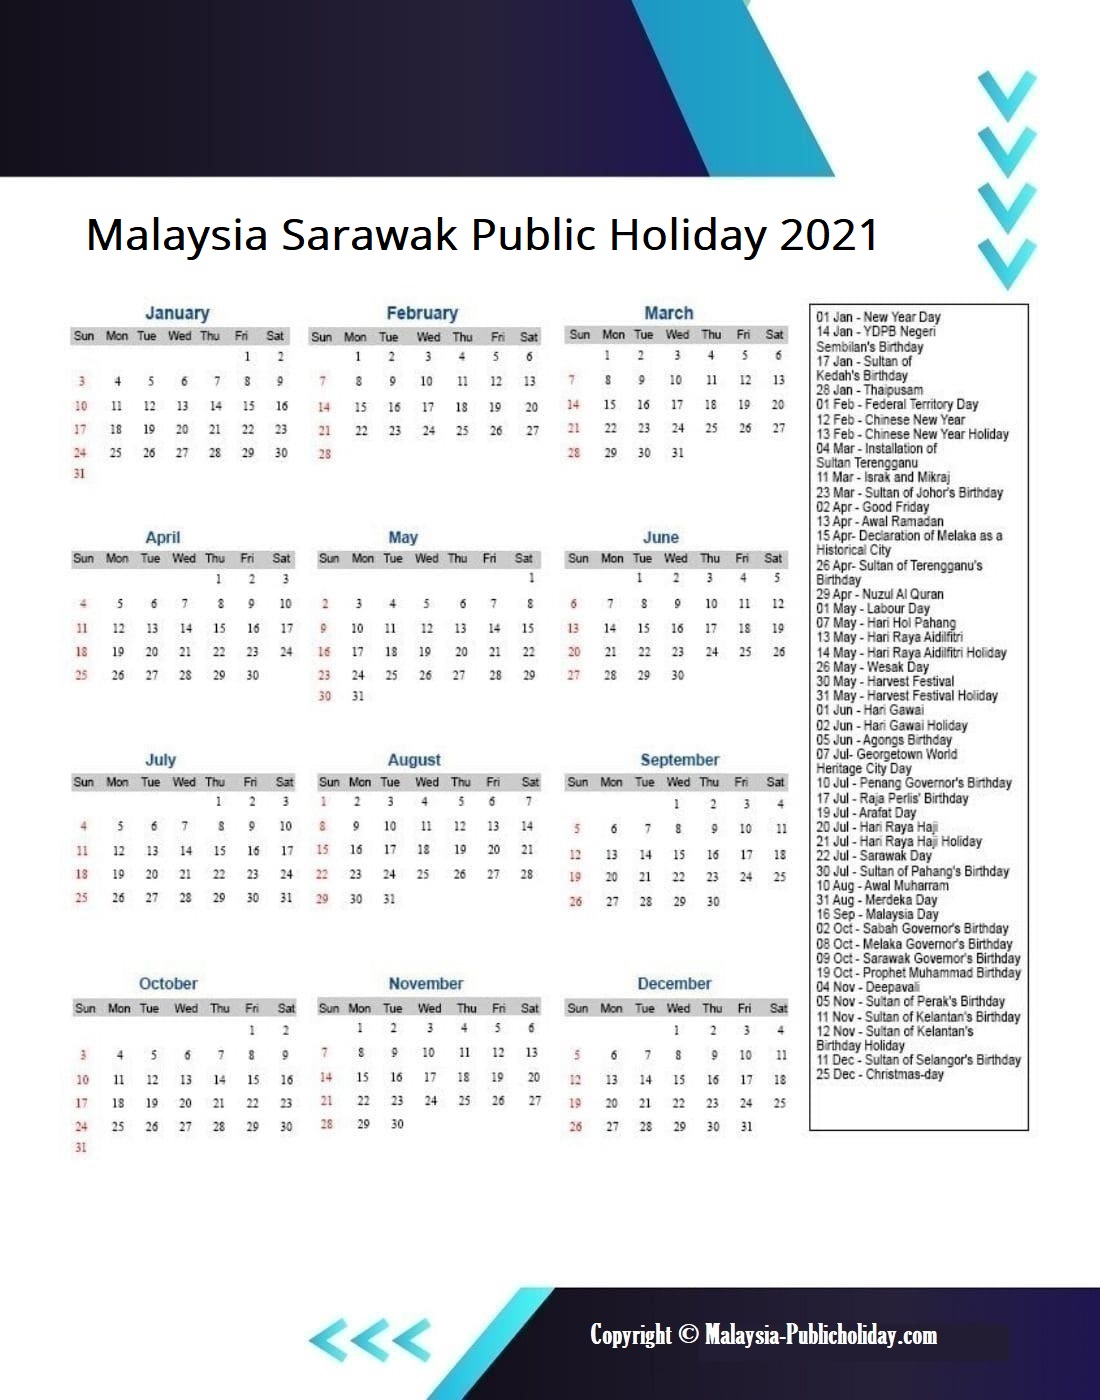 Kalender Mei 2021 Malaysia : Calendar 2021 malaysia ...